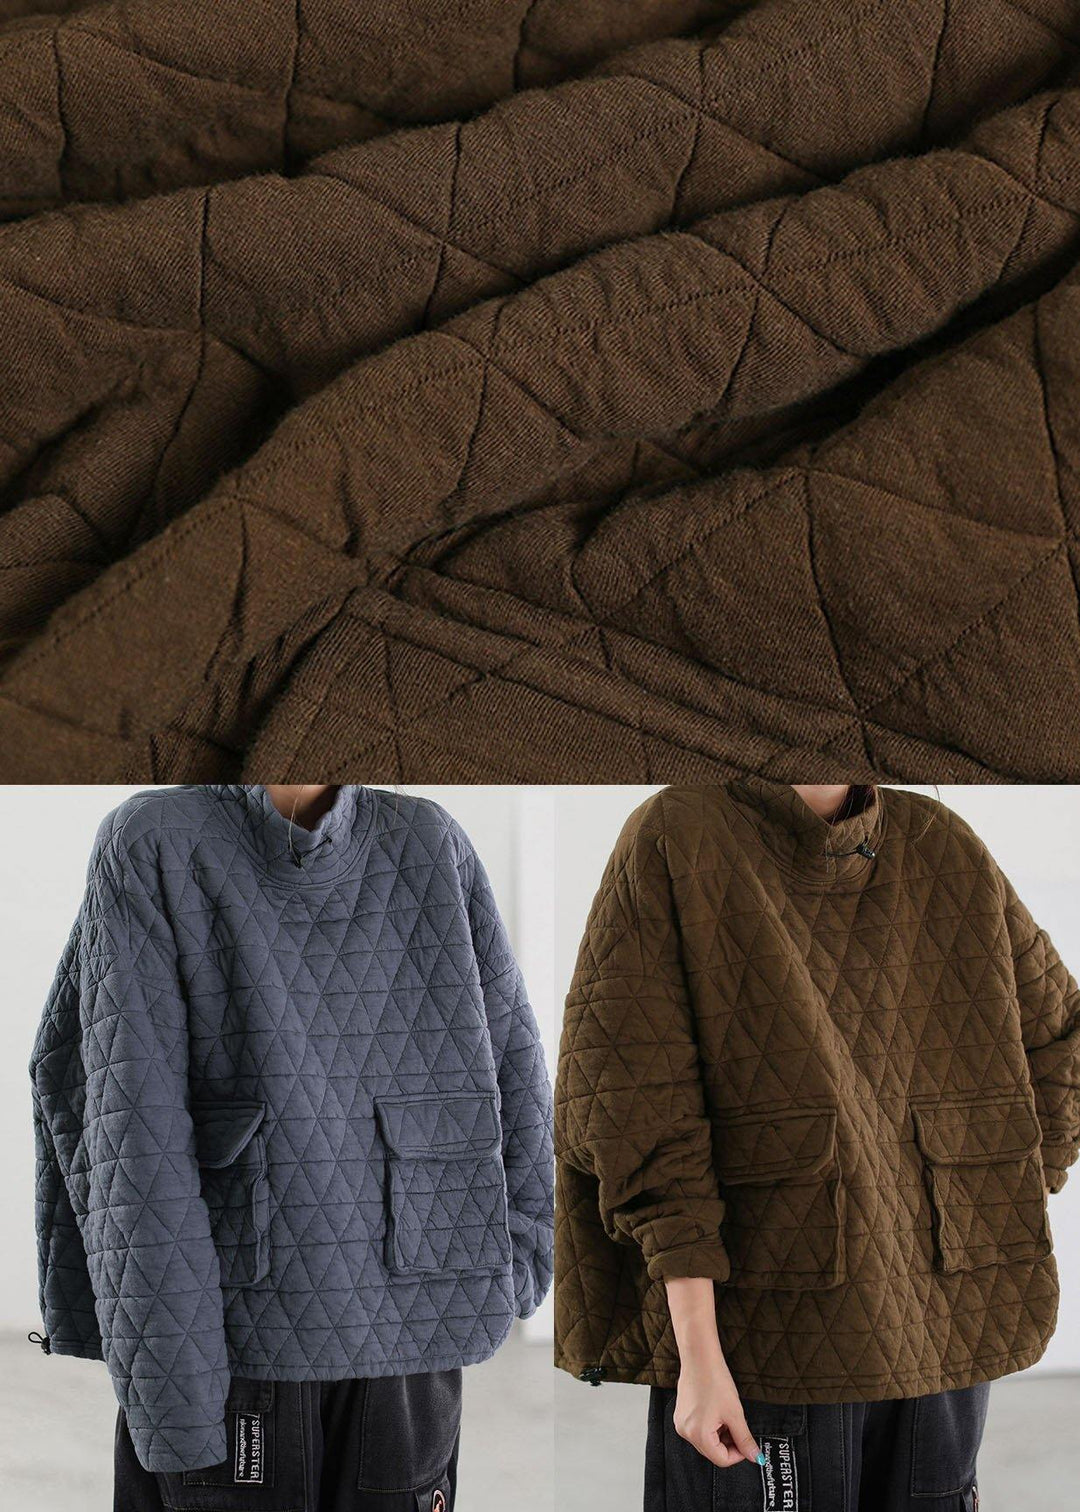 DIY Brown Pockets Fine Cotton Filled Winter Top - Omychic